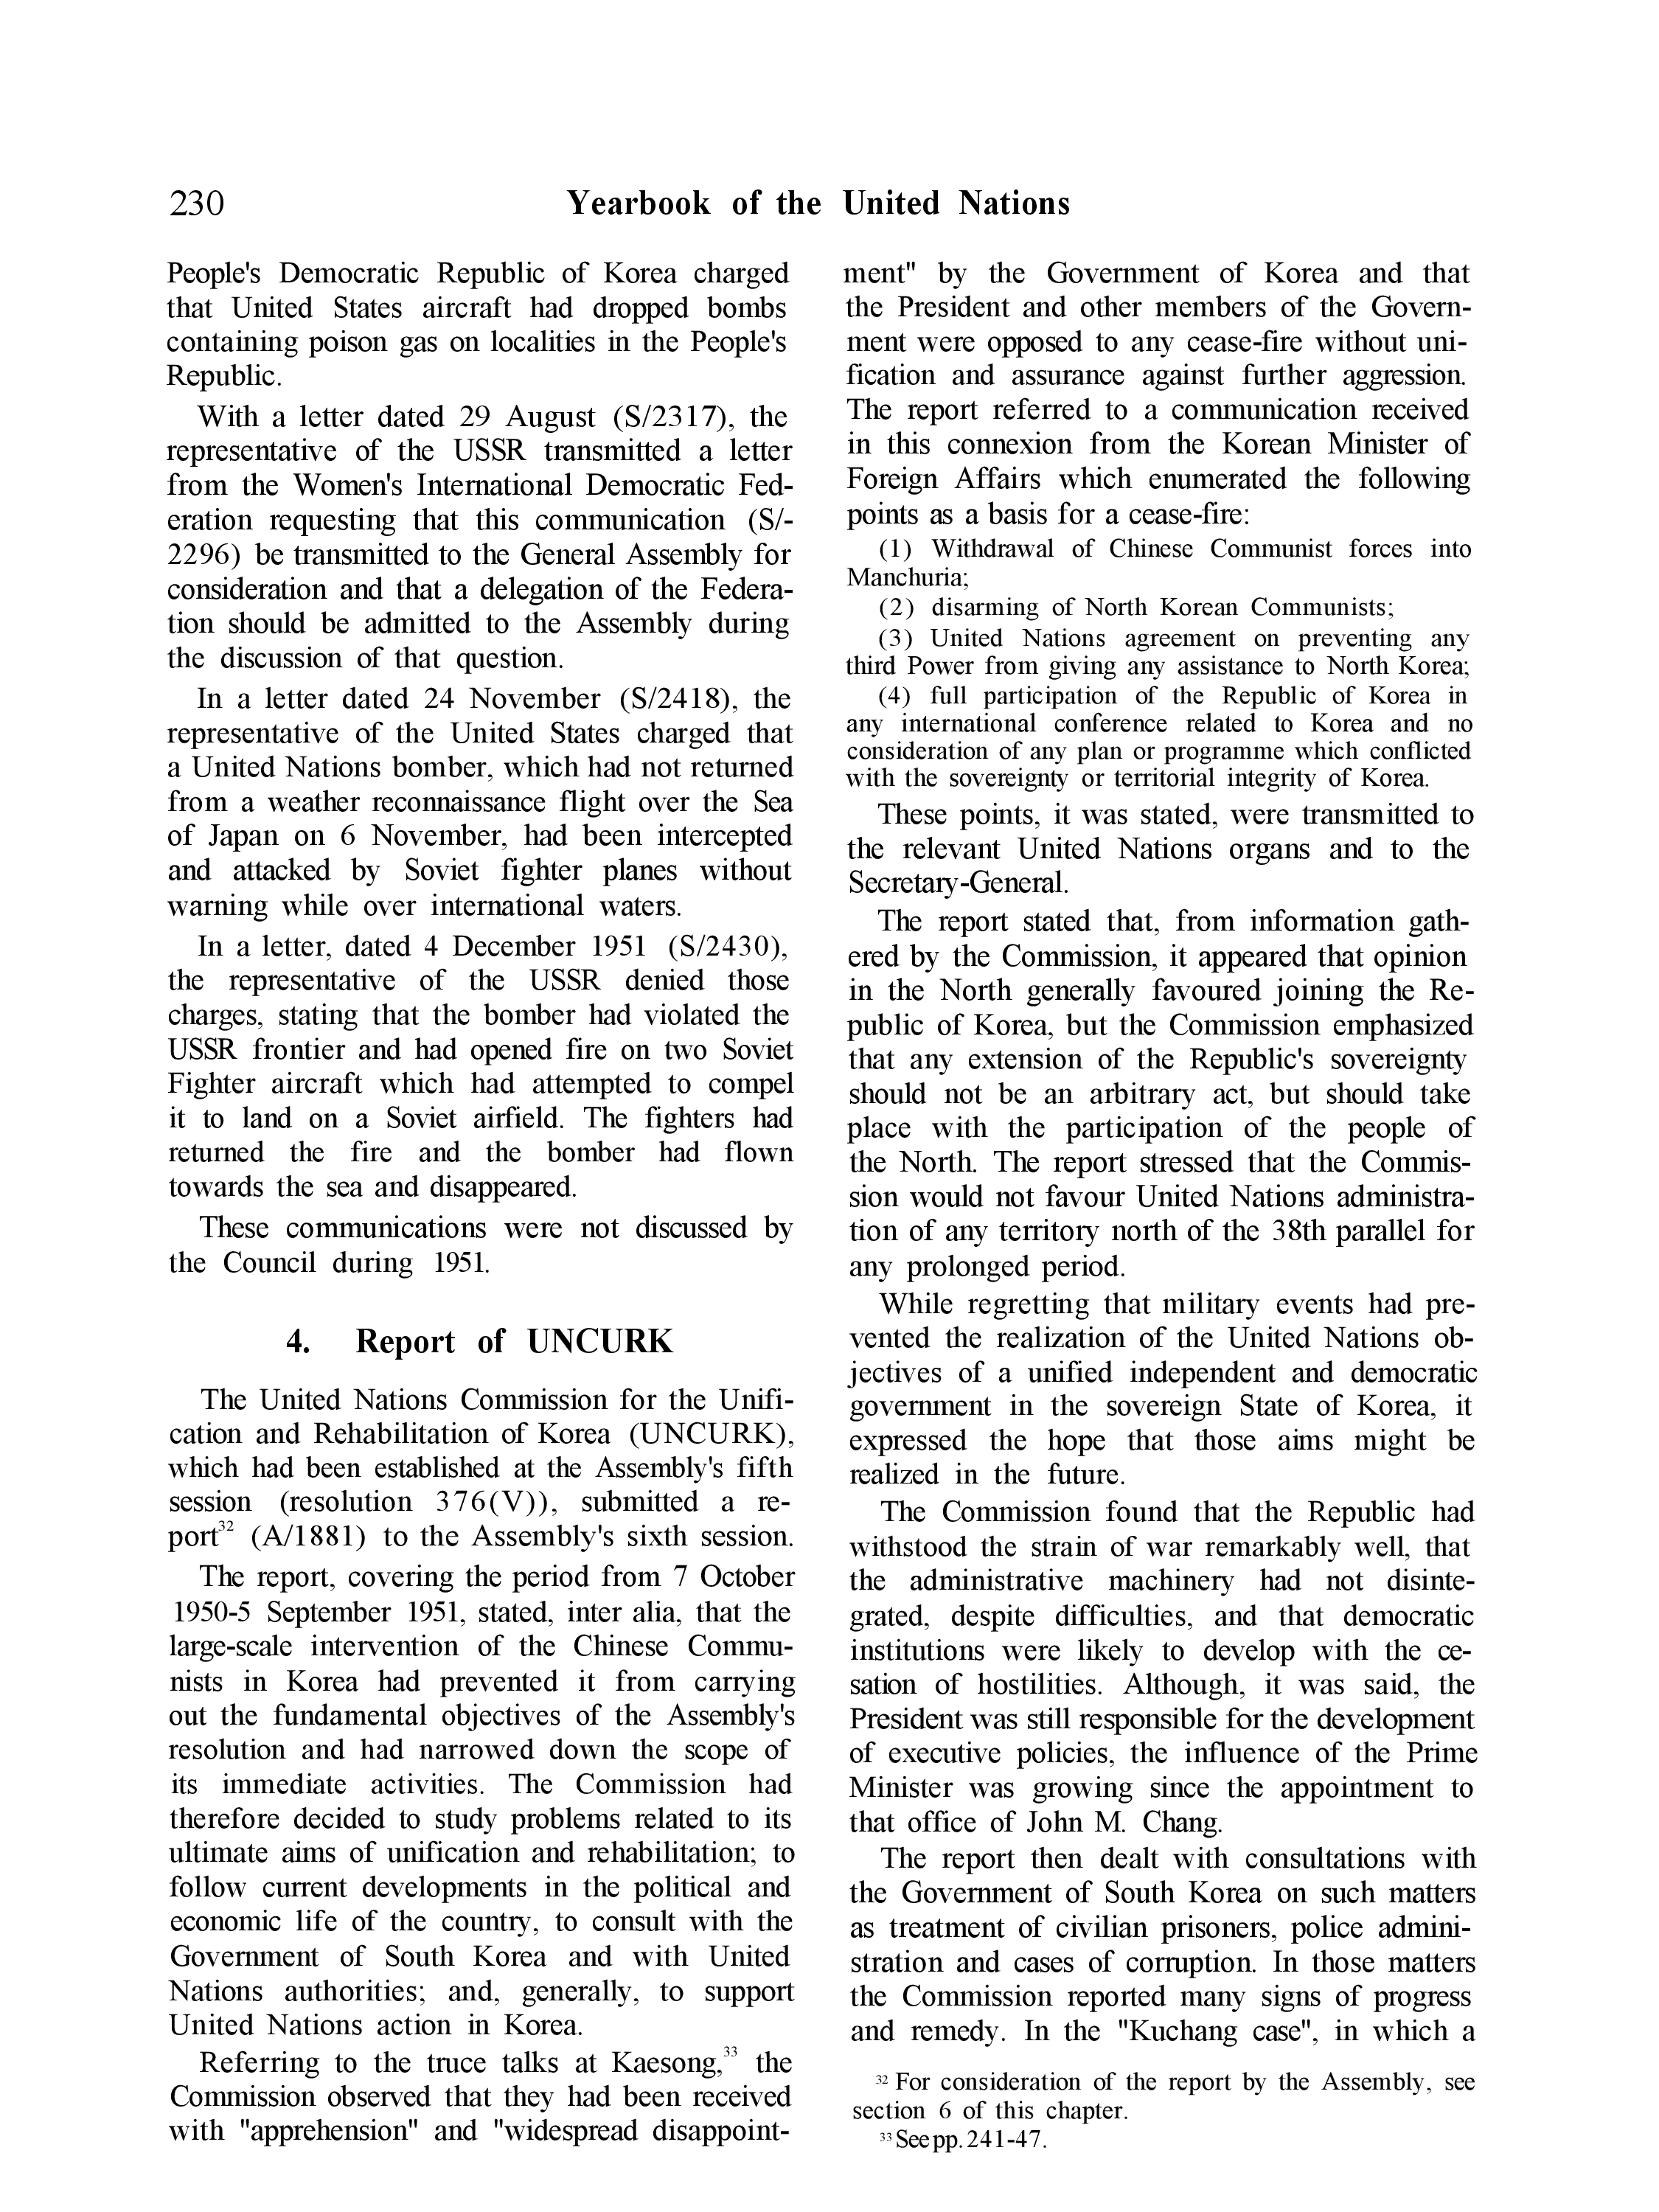 YUN Volume_Page 1951_240